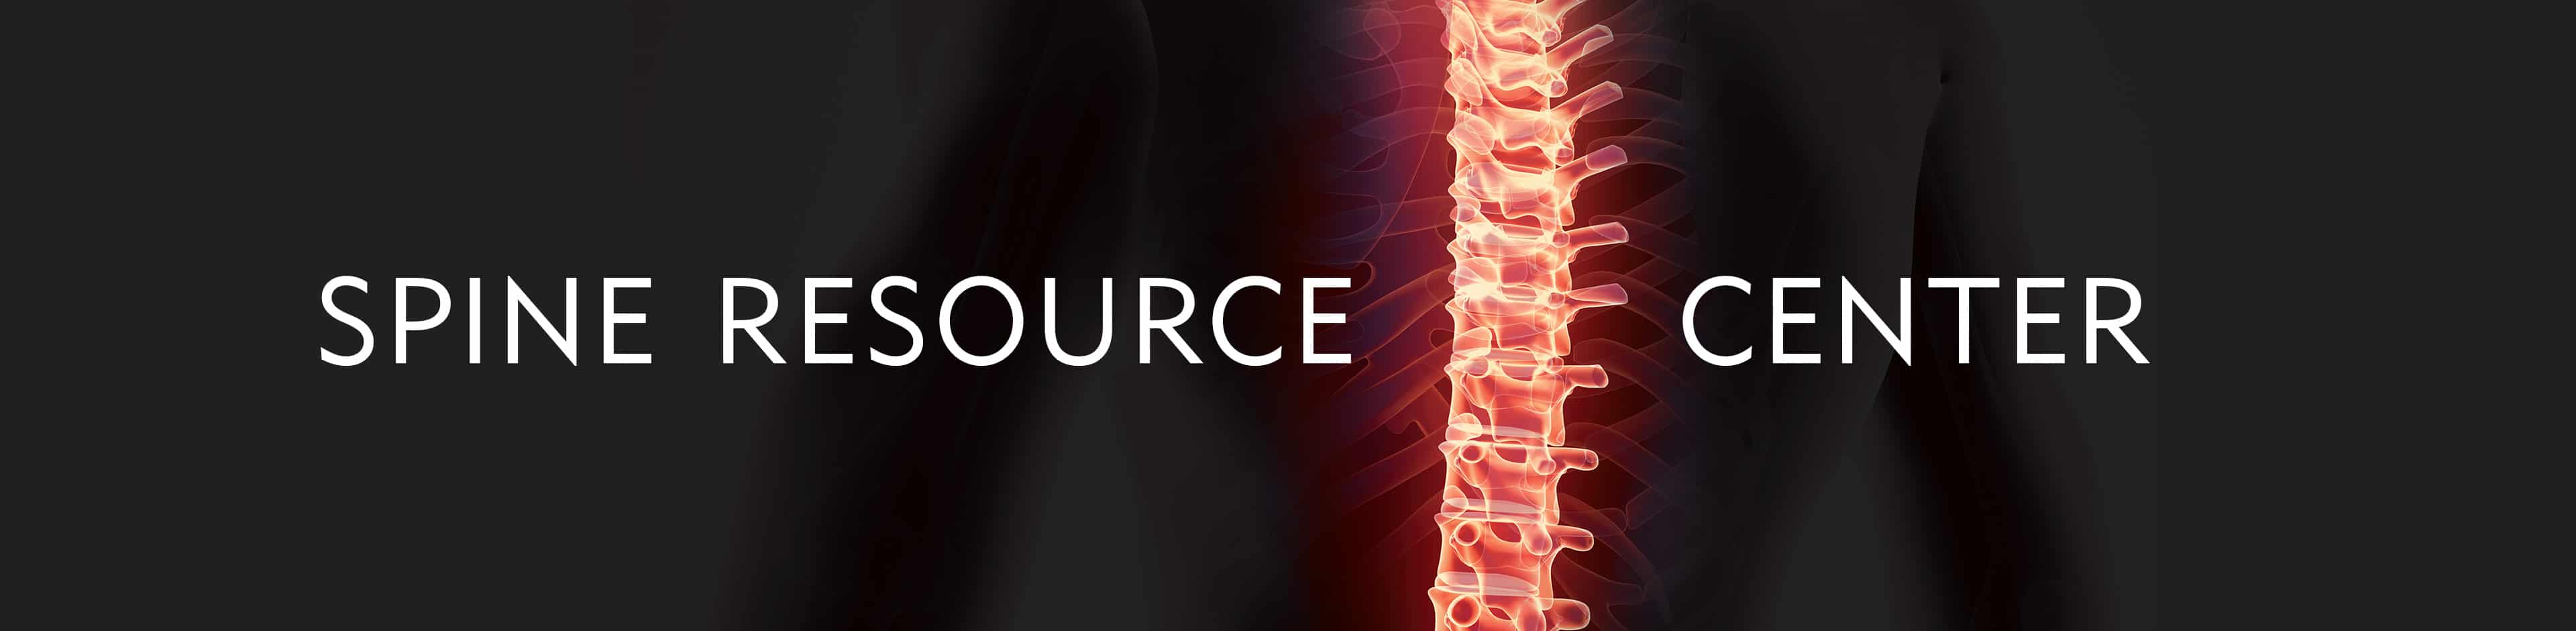 Spine Resource Center - Merit medical